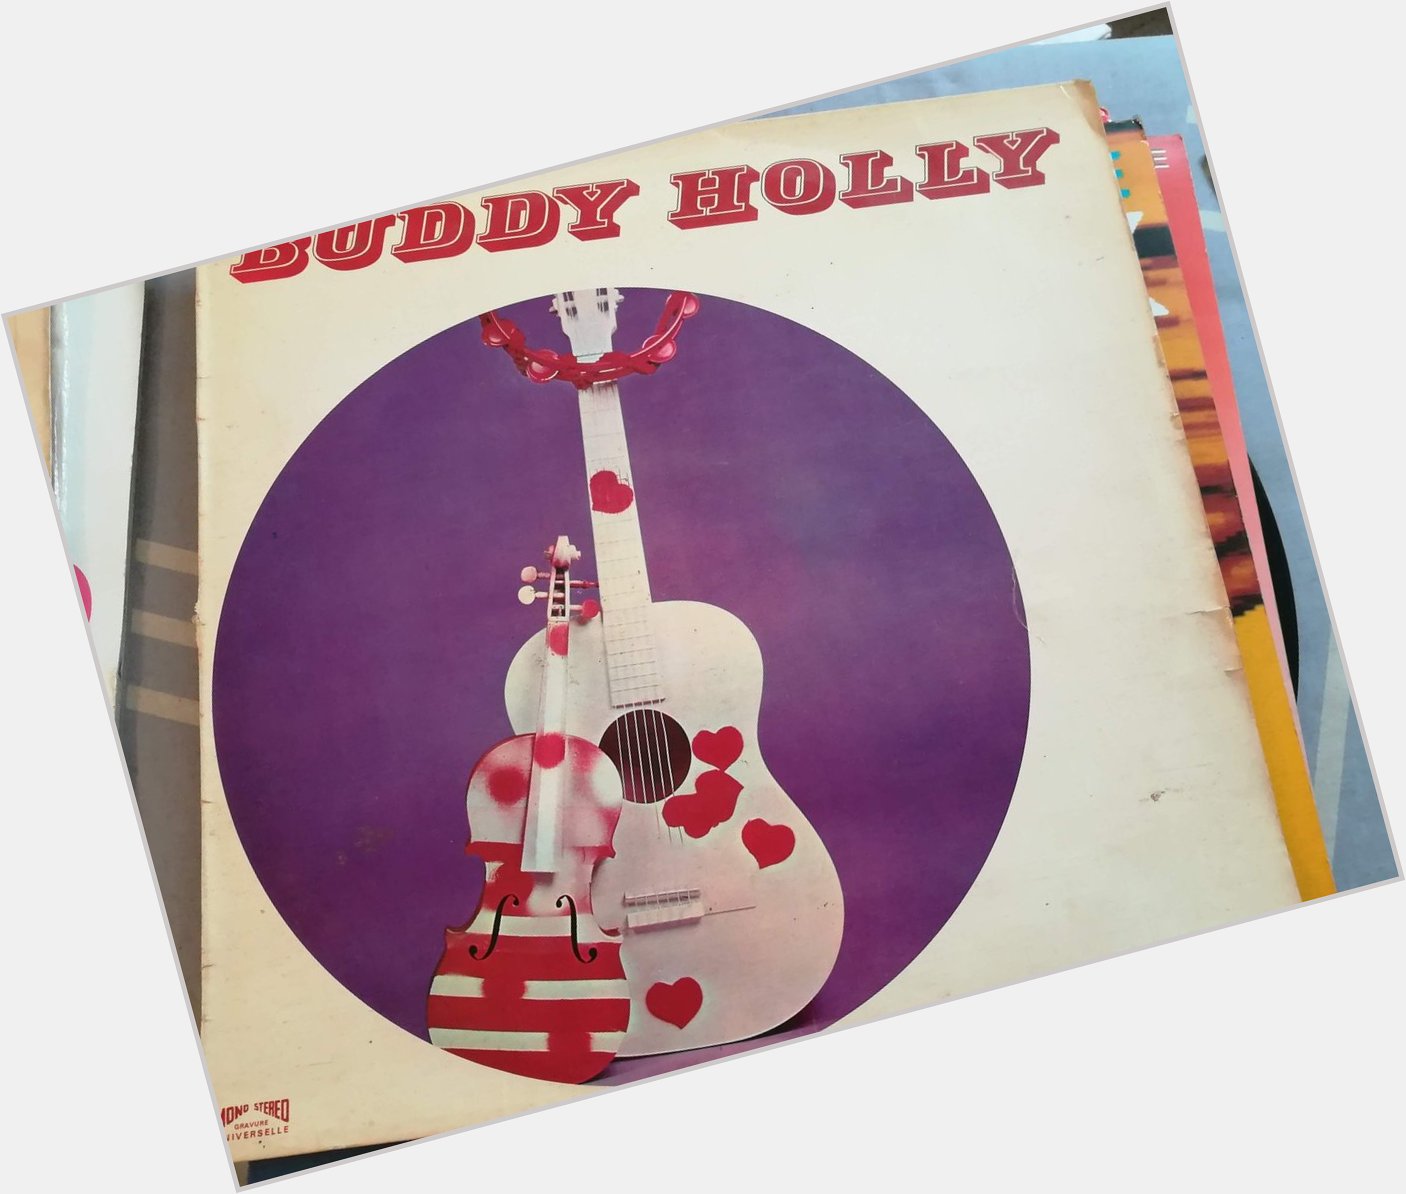 Happy birthday to Buddy Holly 